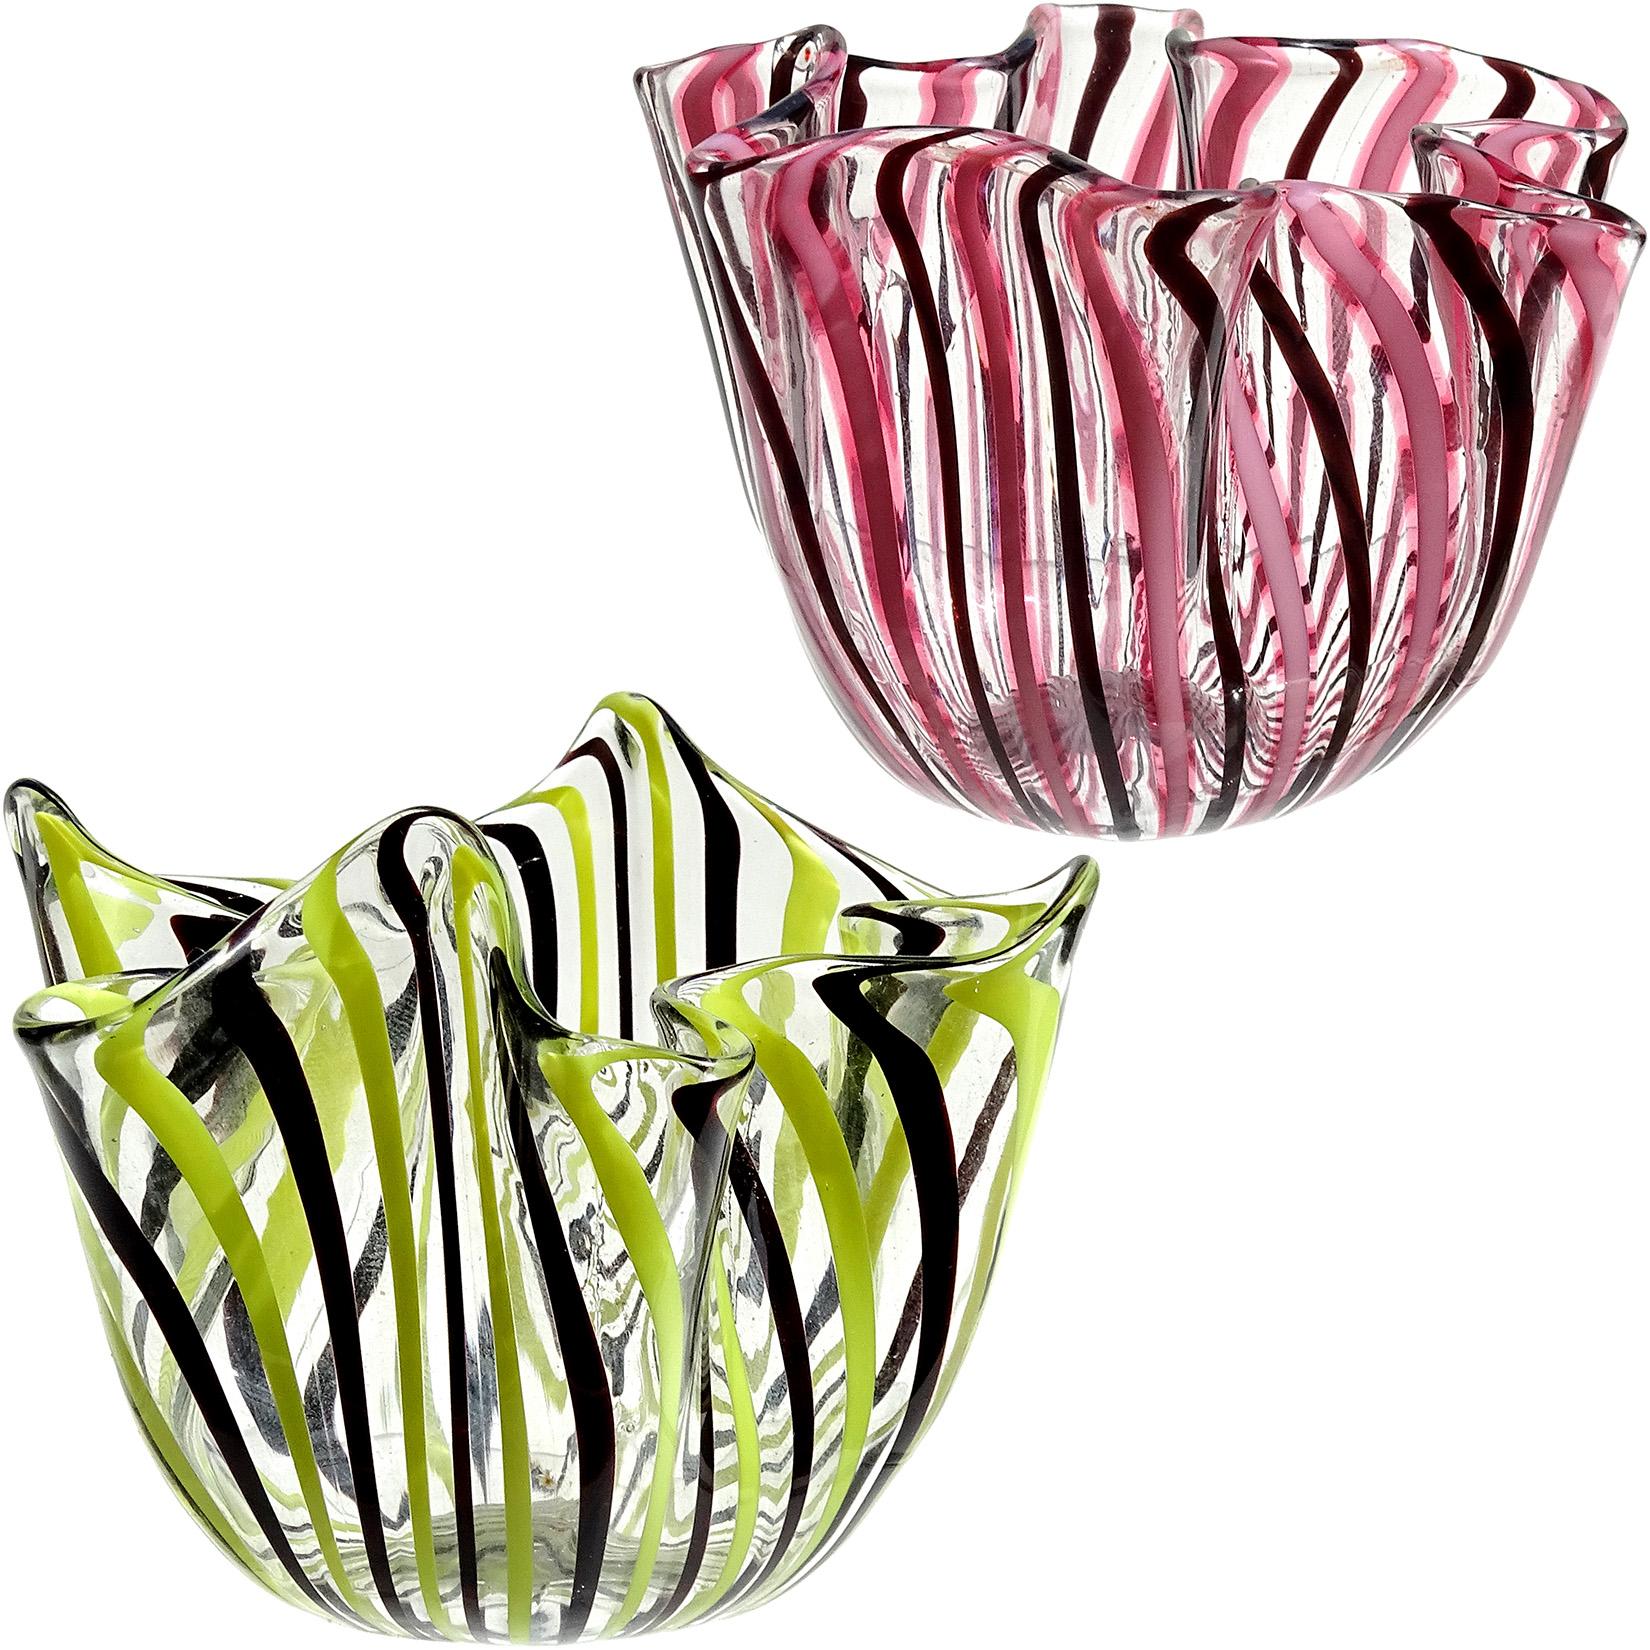 Bianconi Venini Murano Filigrana Stripes Italian Art Glass Fazzoletto Vases